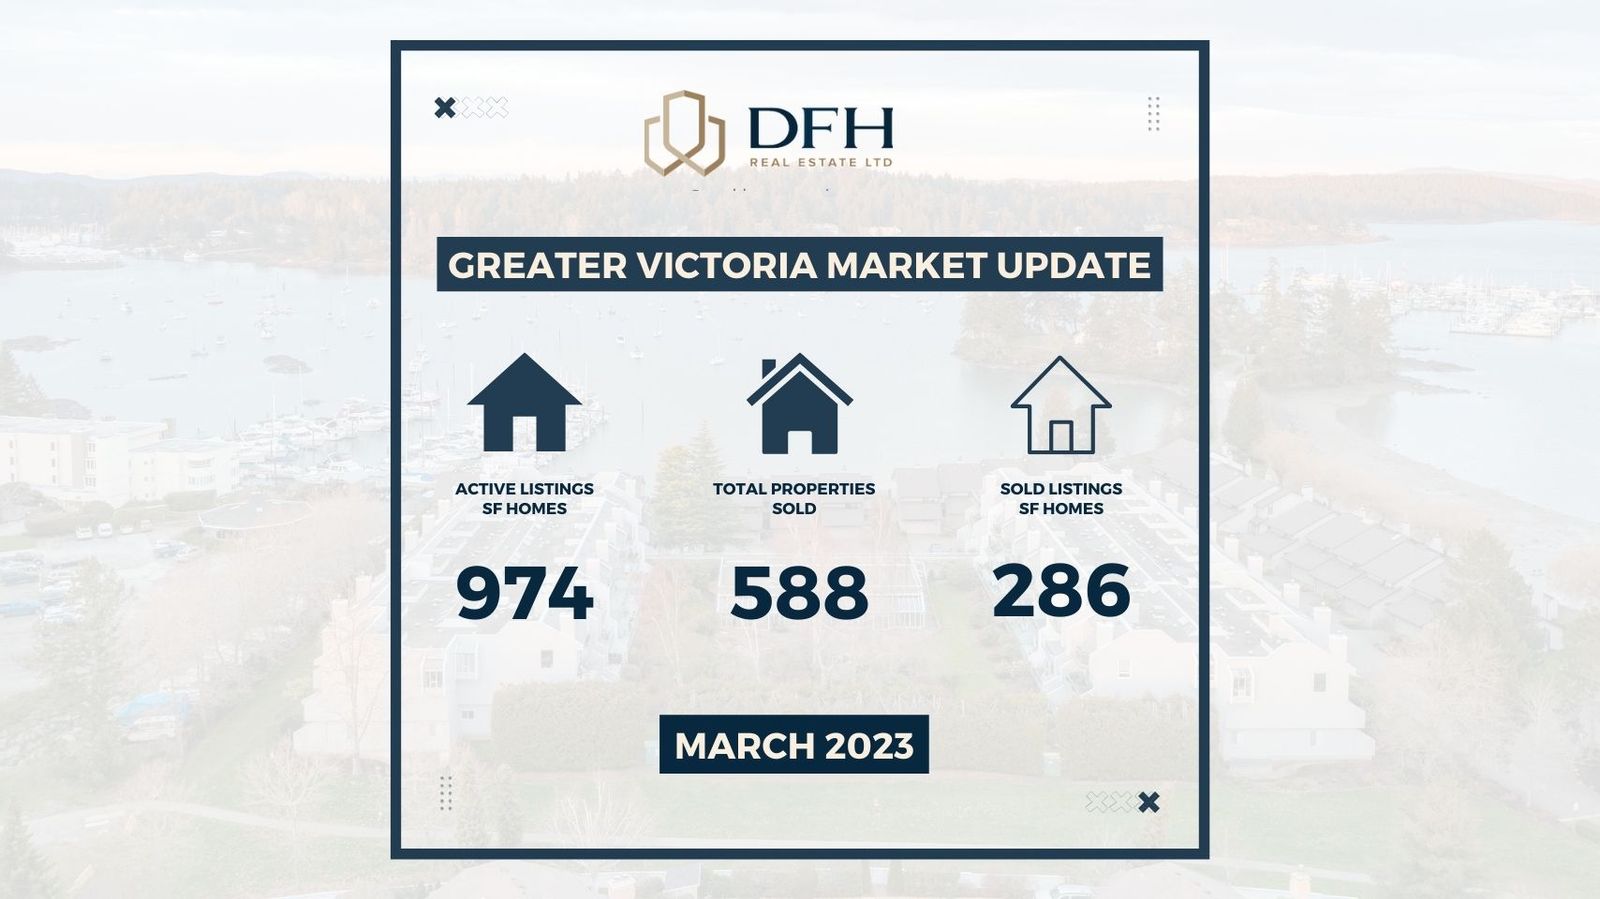 Supply still key to Victoria's housing market